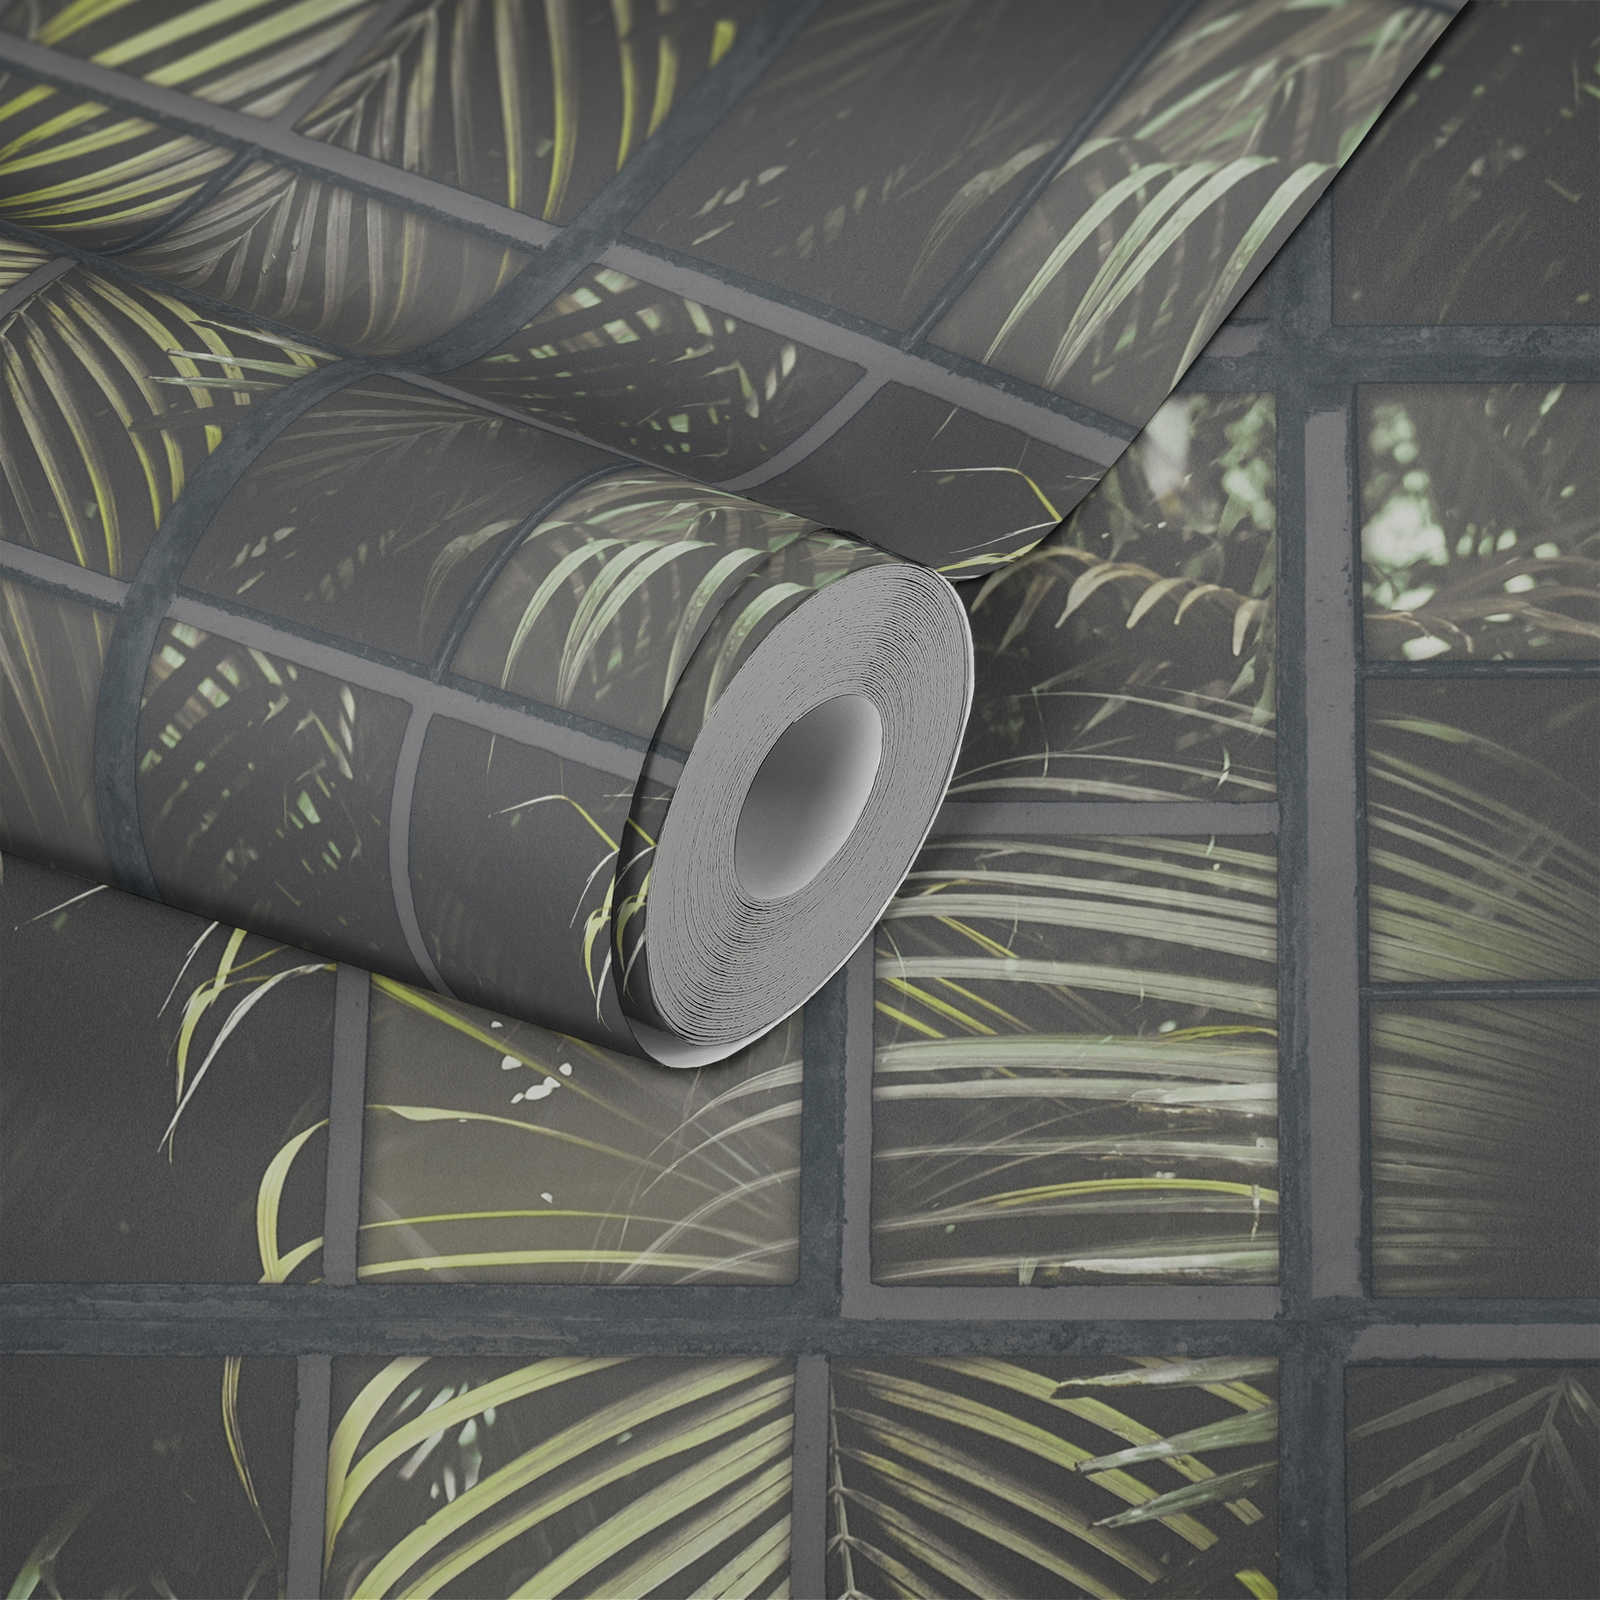             Papel pintado Vista de la selva, Efecto 3D - Gris, Verde, Negro
        